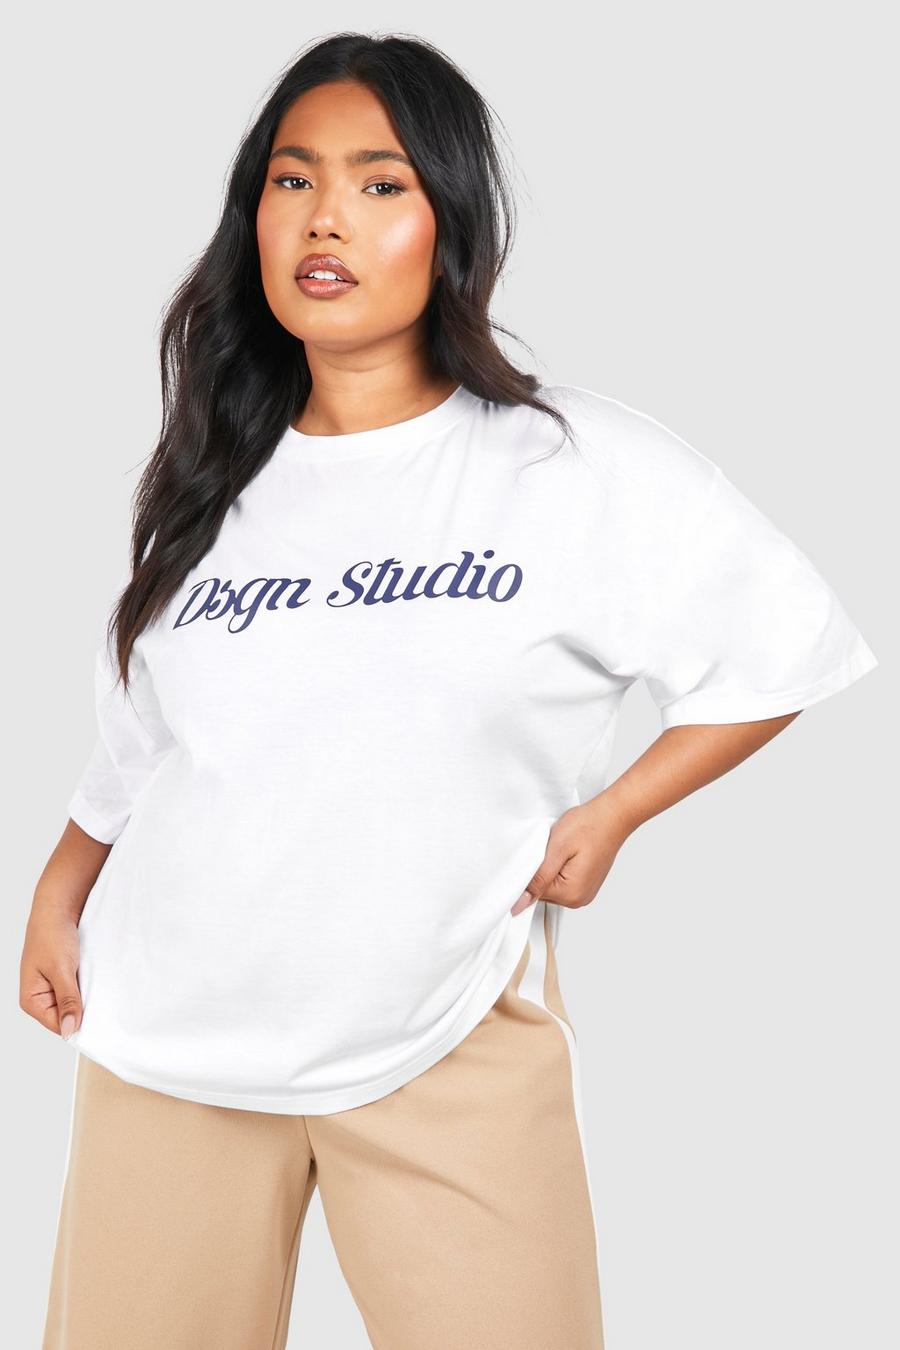 Grande taille - T-shirt oversize à slogan Dsgn Studio, White